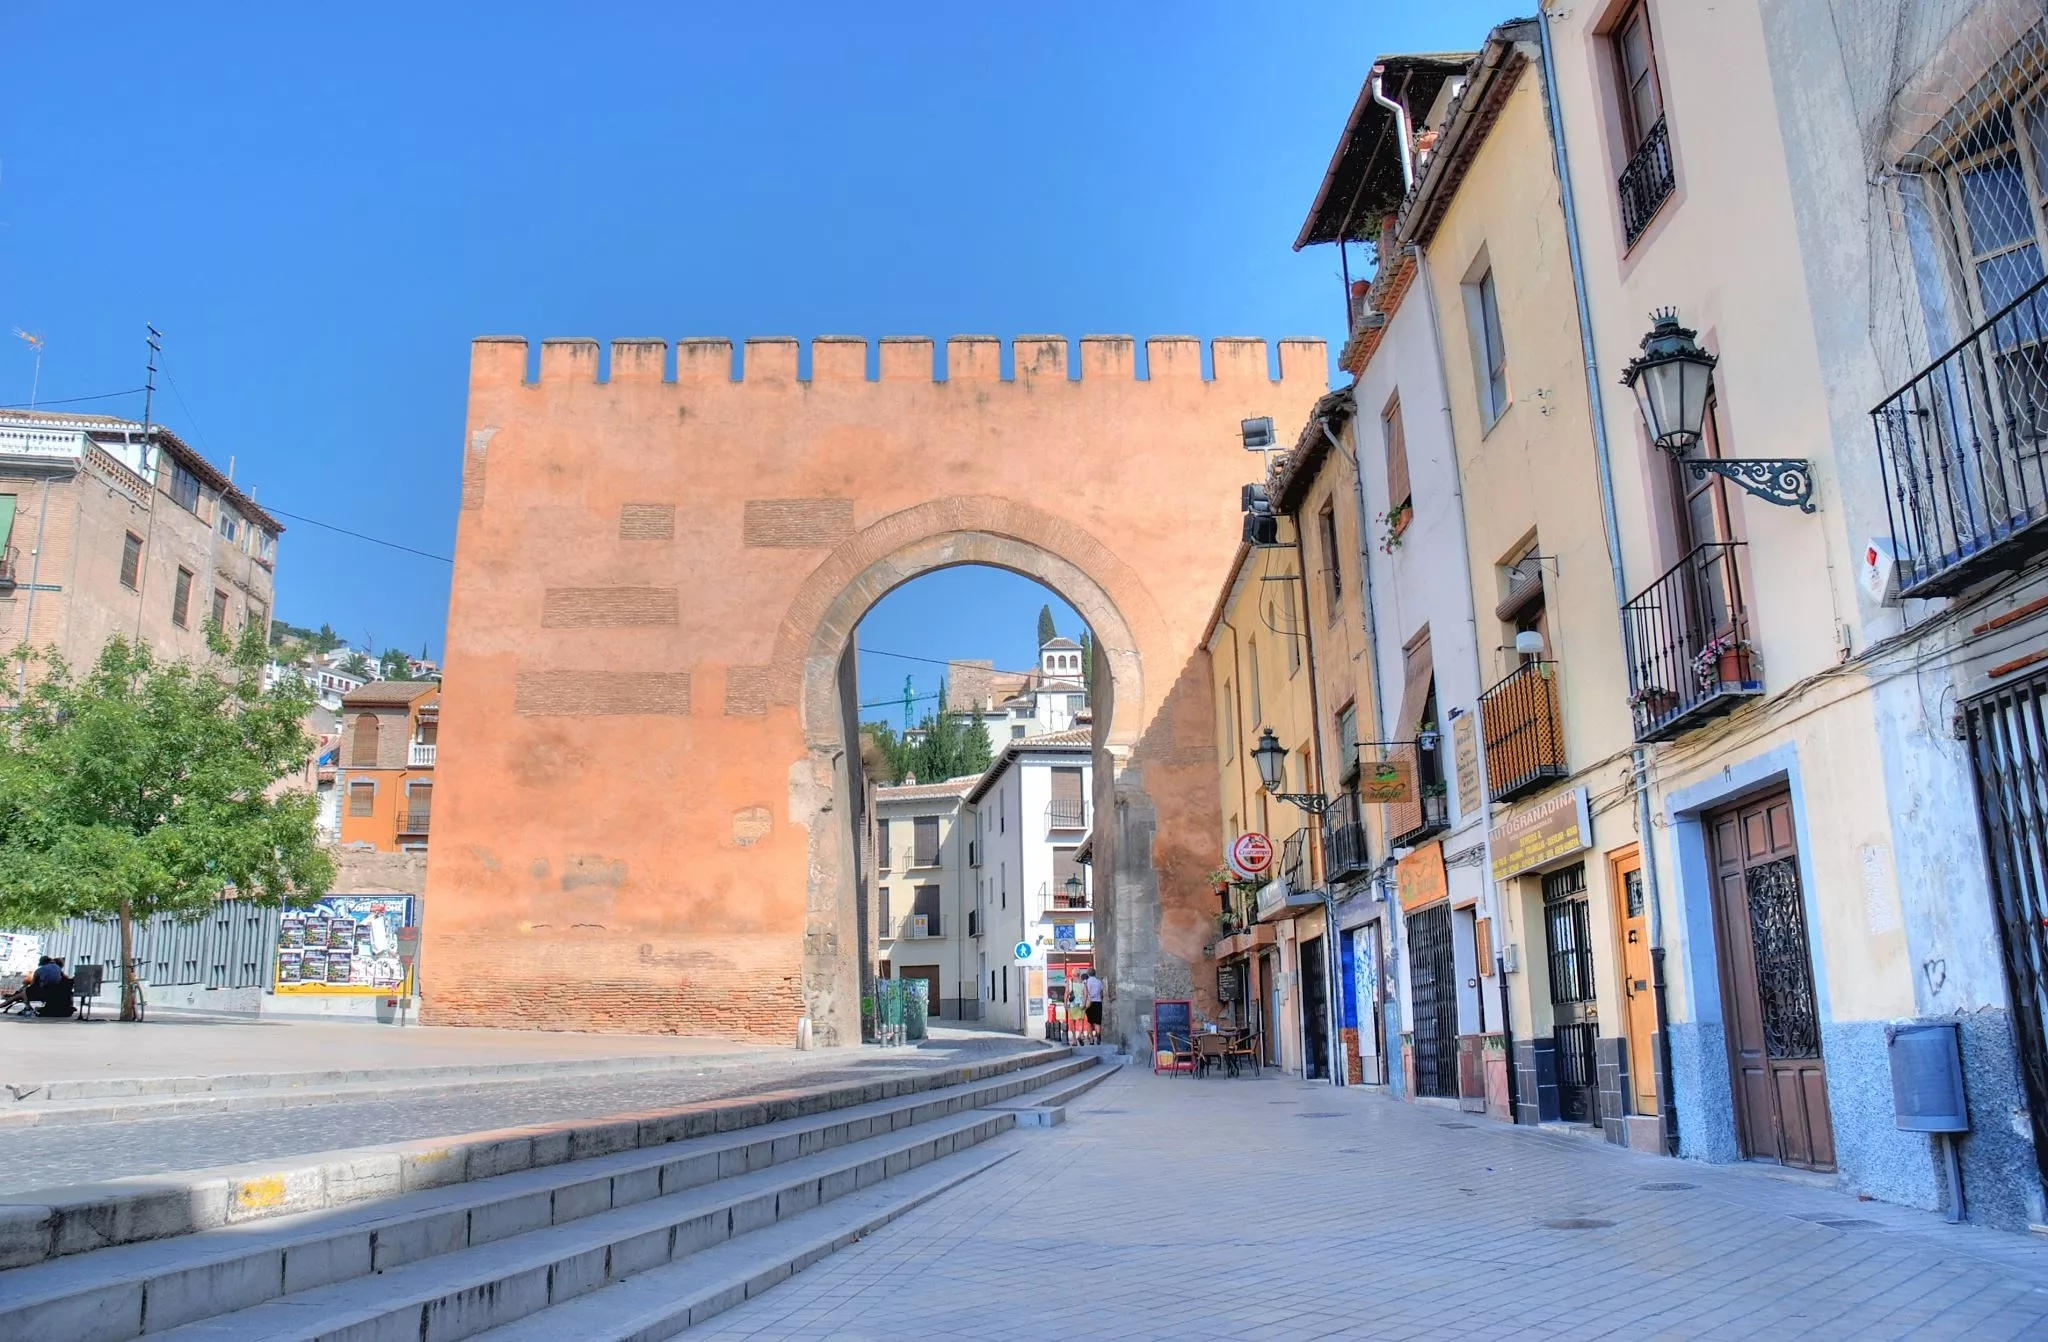 Puerta Elvira in Spain, Europe | Architecture - Rated 3.6